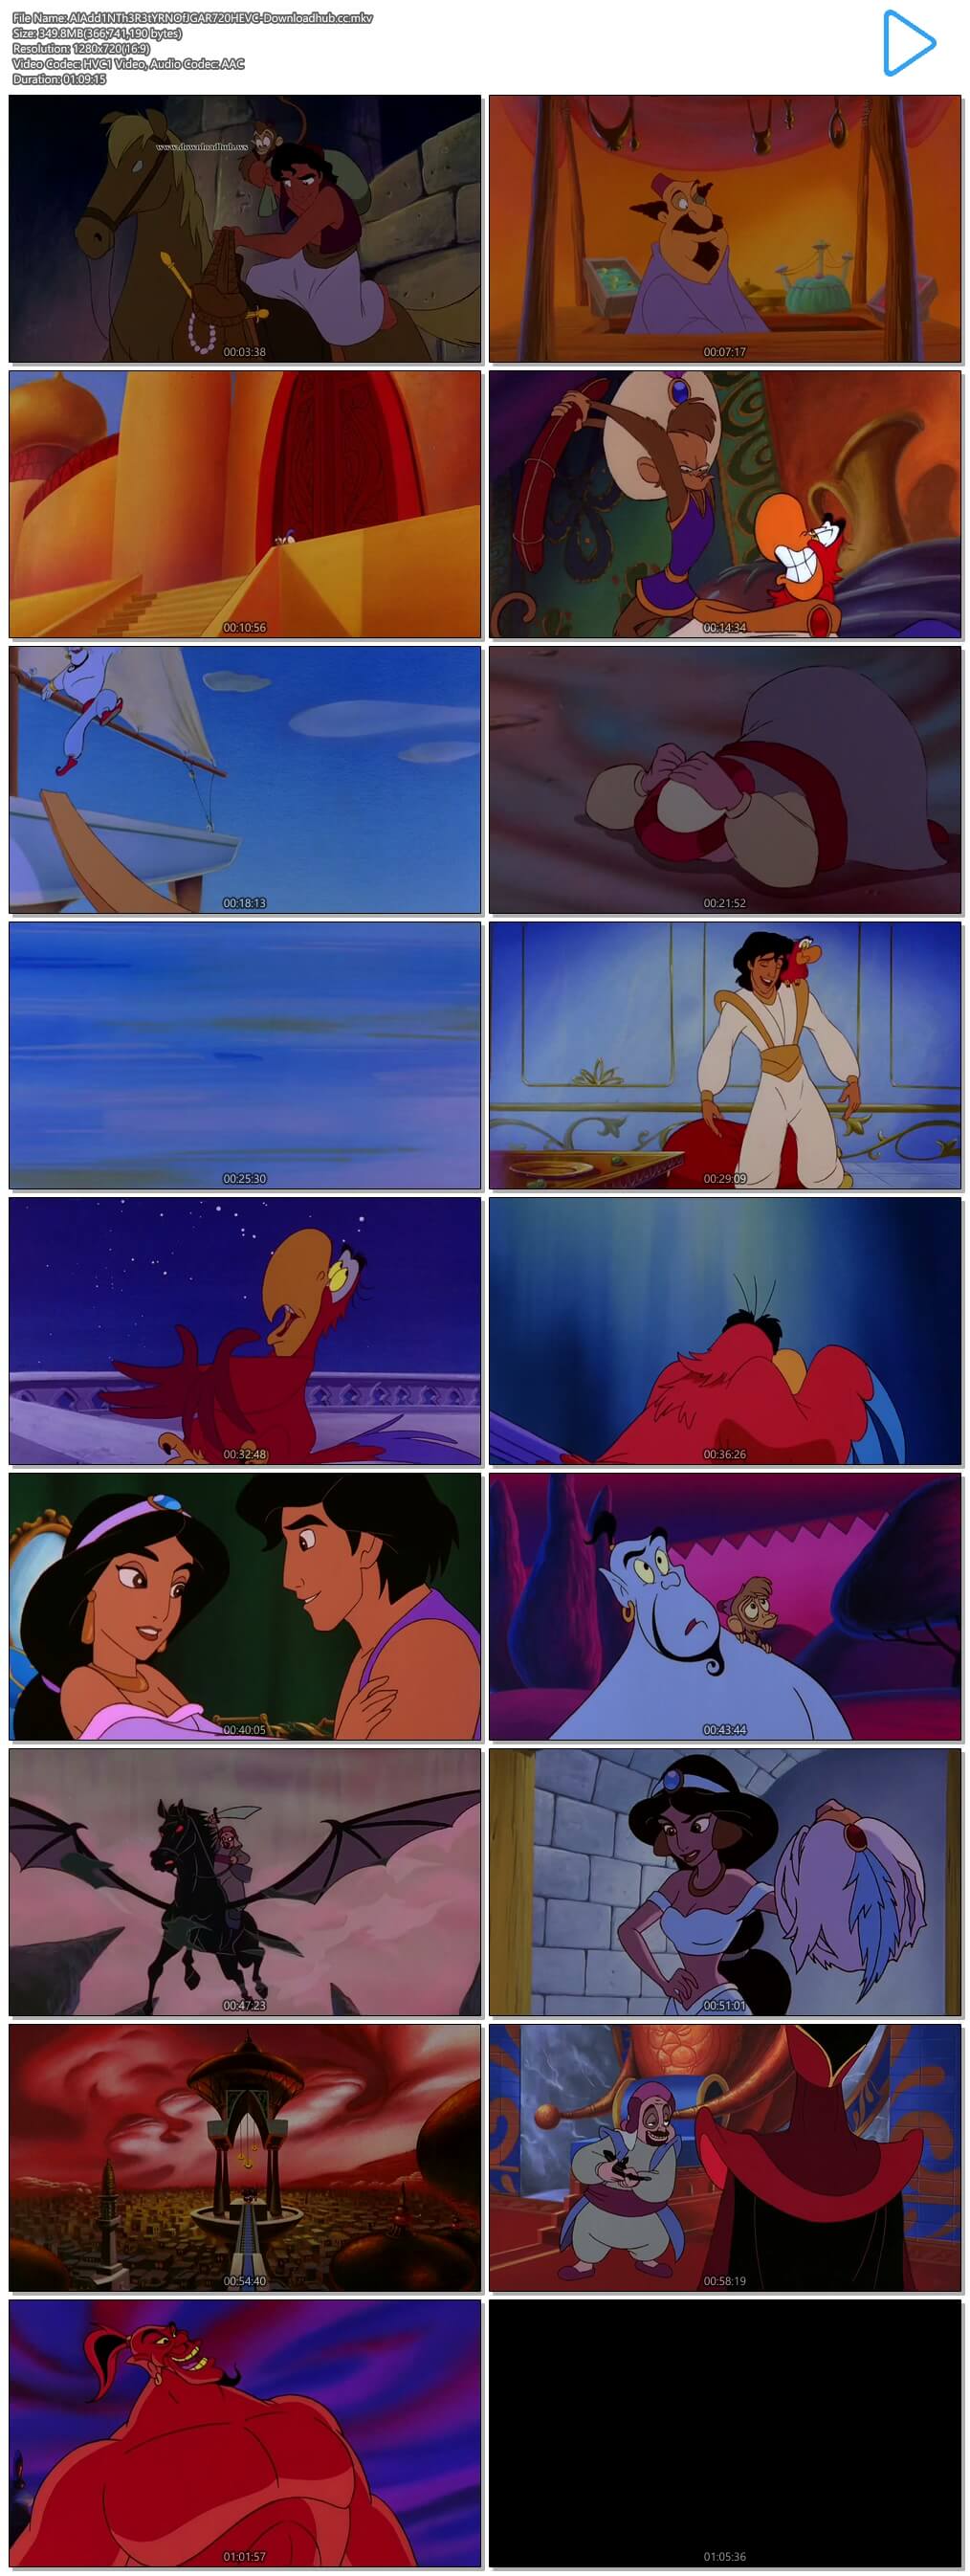 Aladdin The Return of Jafar 1994 Hindi Dual Audio 720p HEVC BluRay Free Download